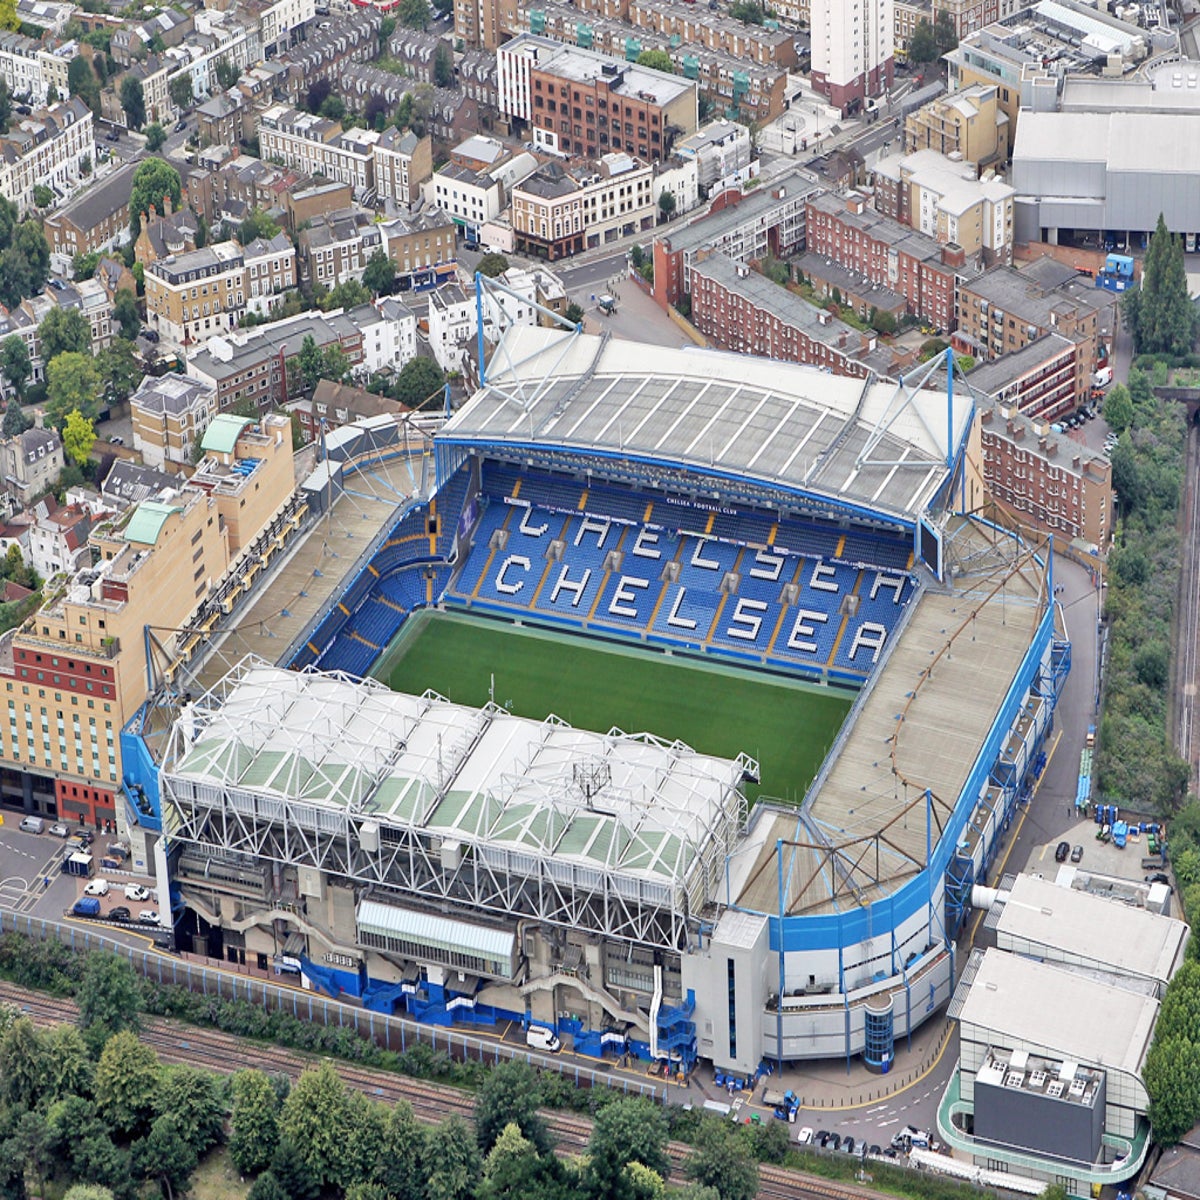 Chelsea FC news: Blues put new stadium project on hold – talkSPORT